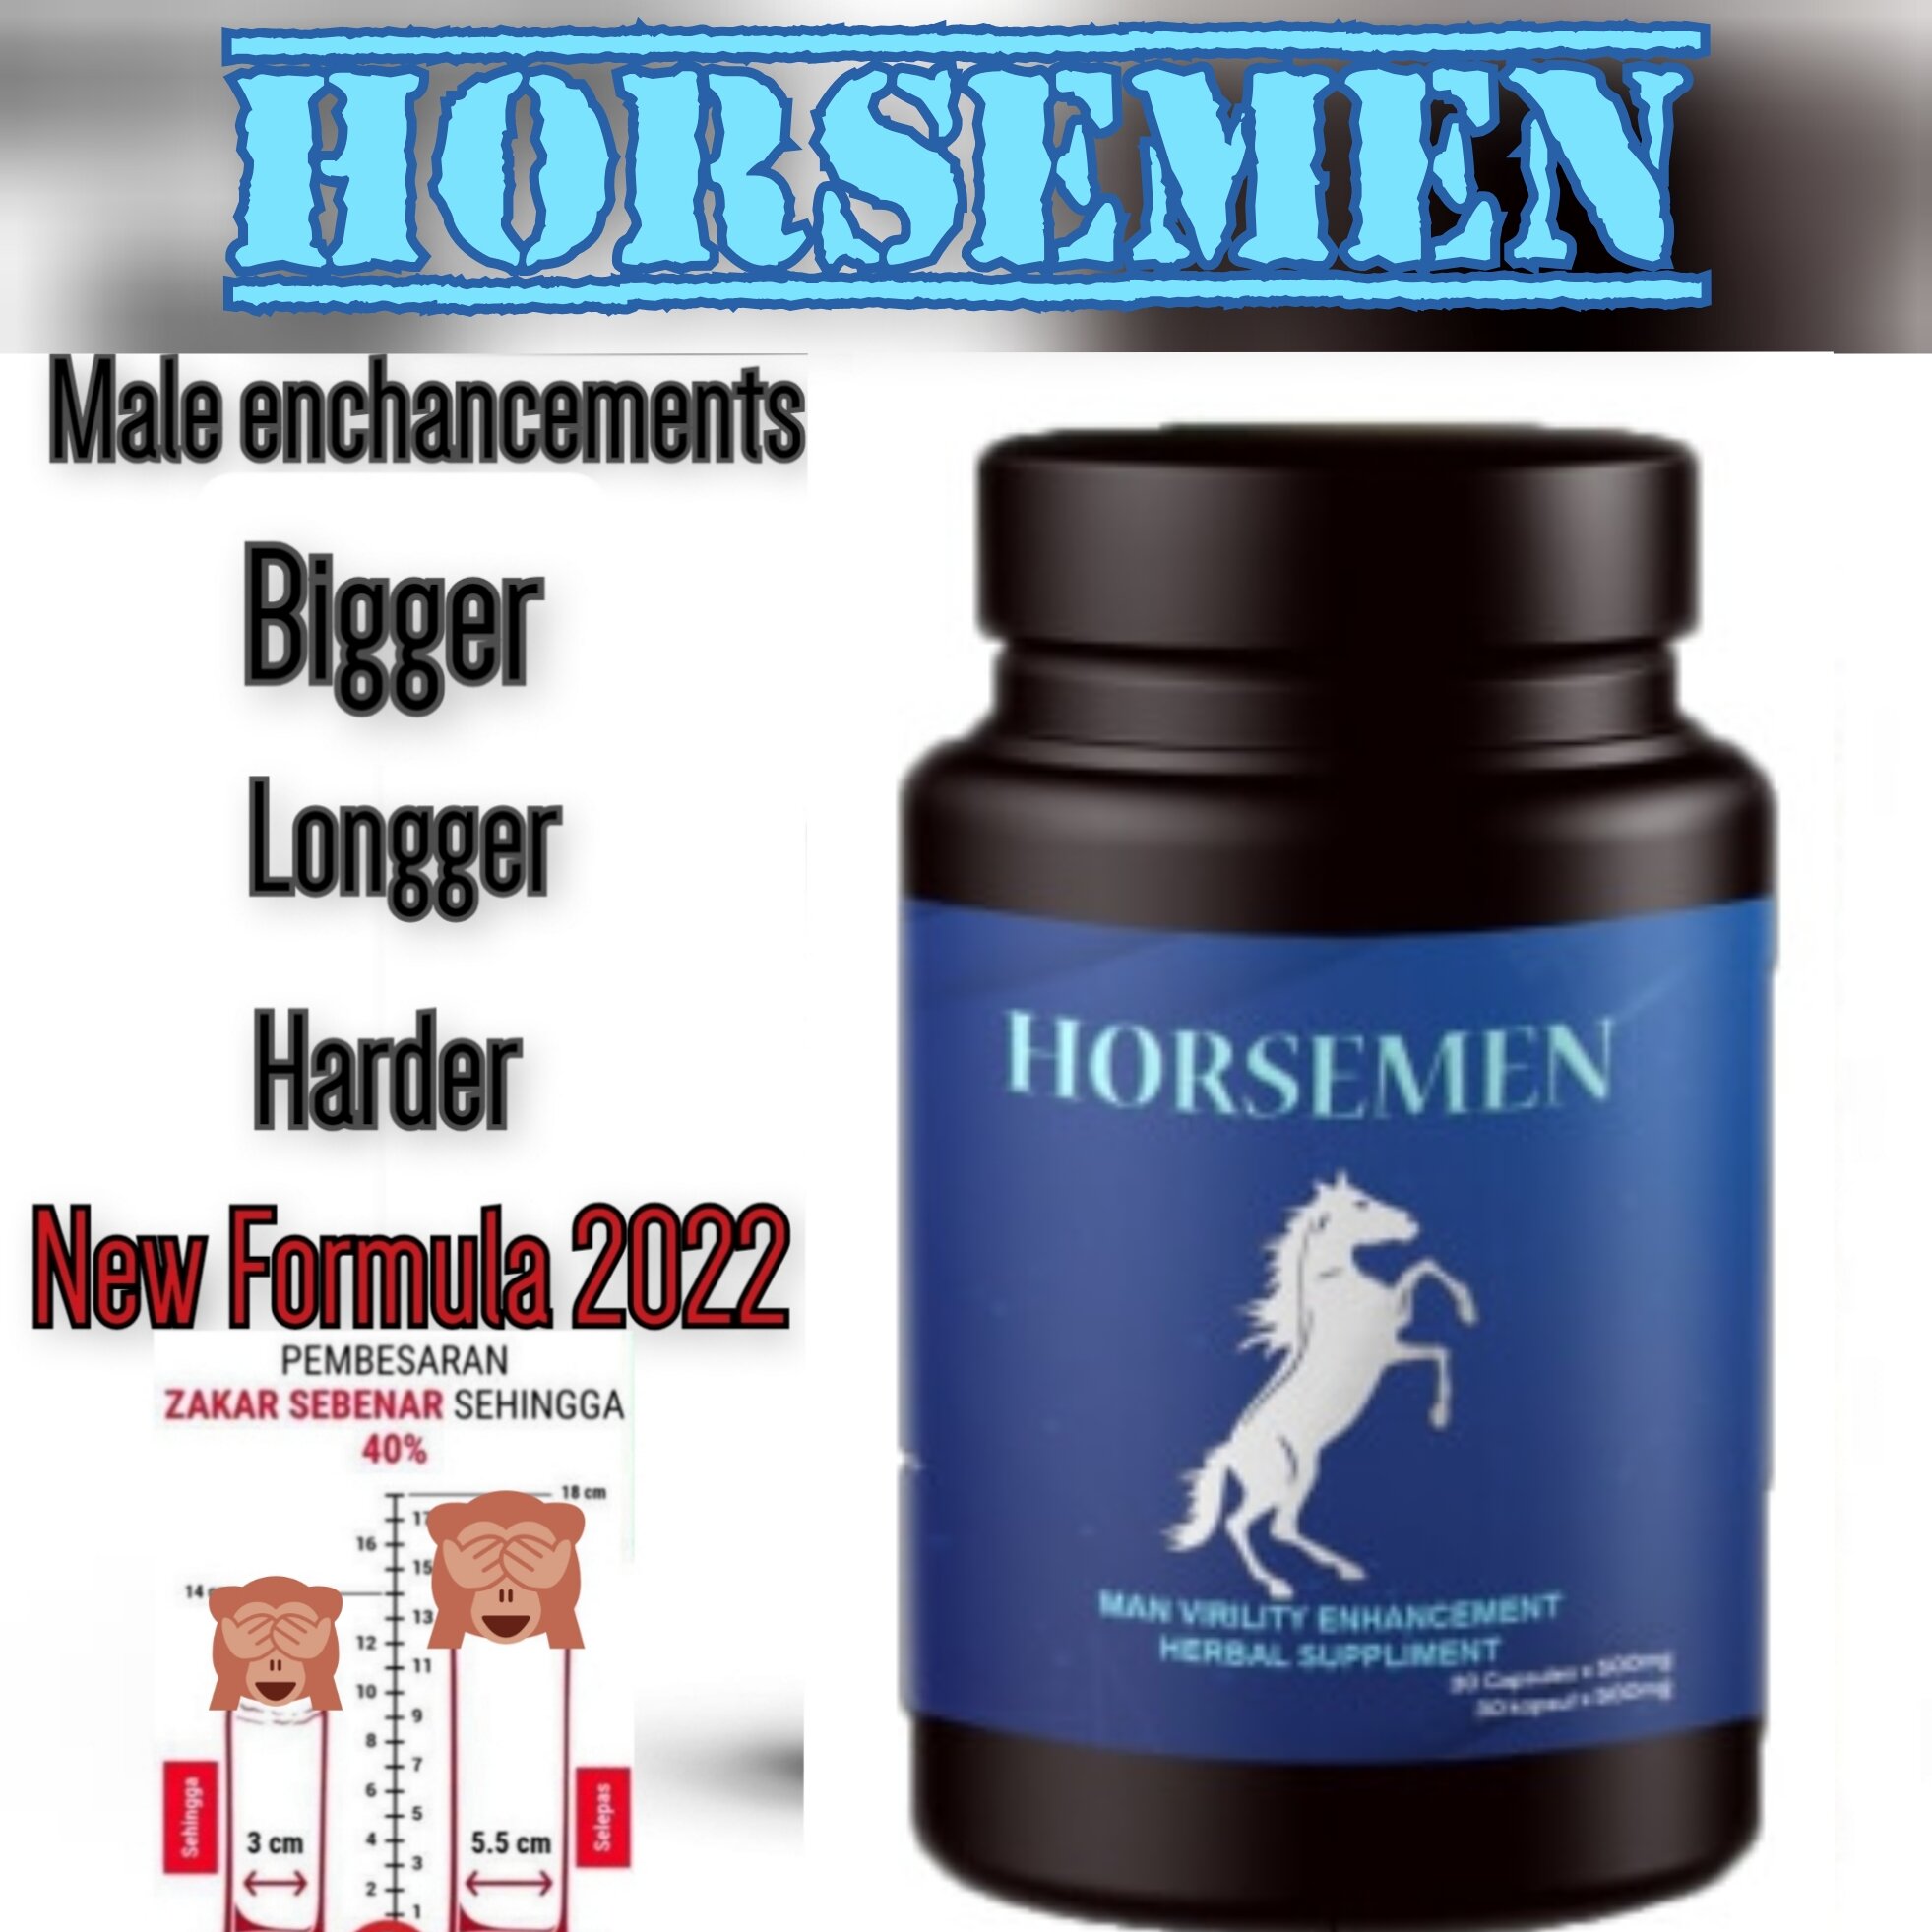 Horseman pil